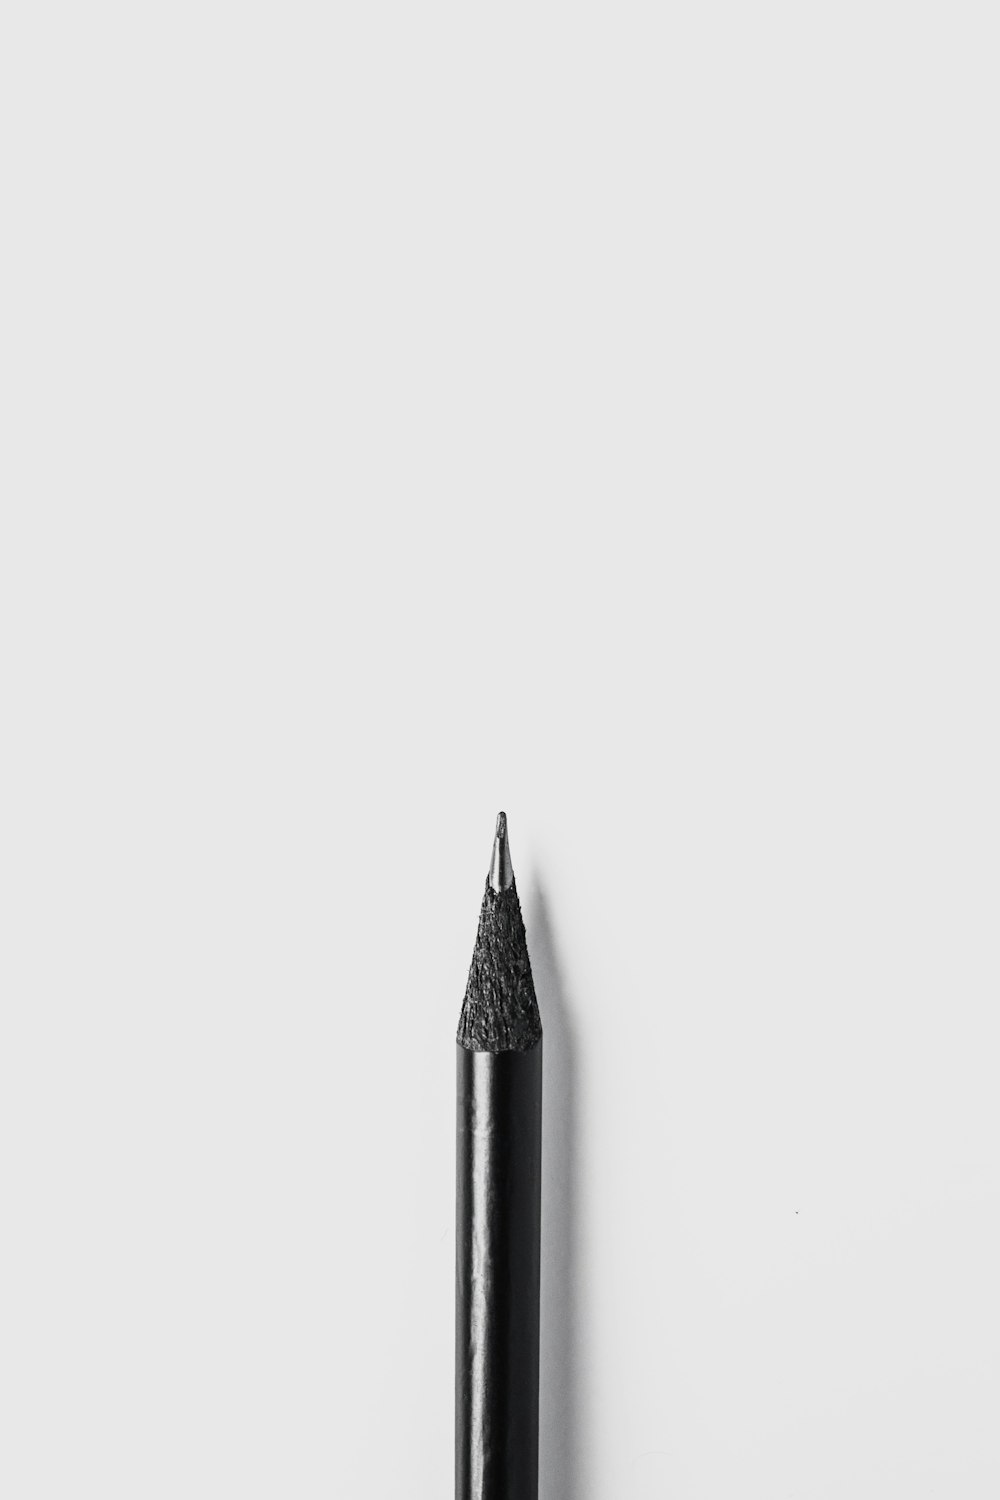 50,000+ Black Pencil Pictures  Download Free Images on Unsplash